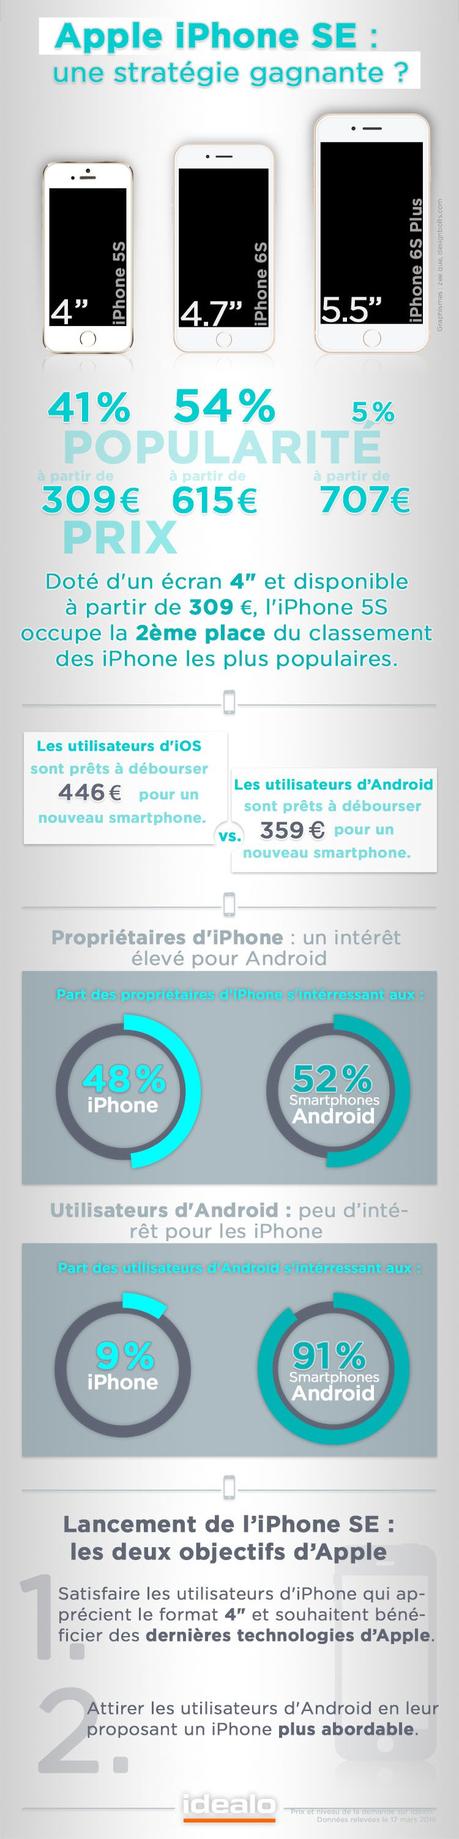 Infographie-Idealo-iPhone-SE